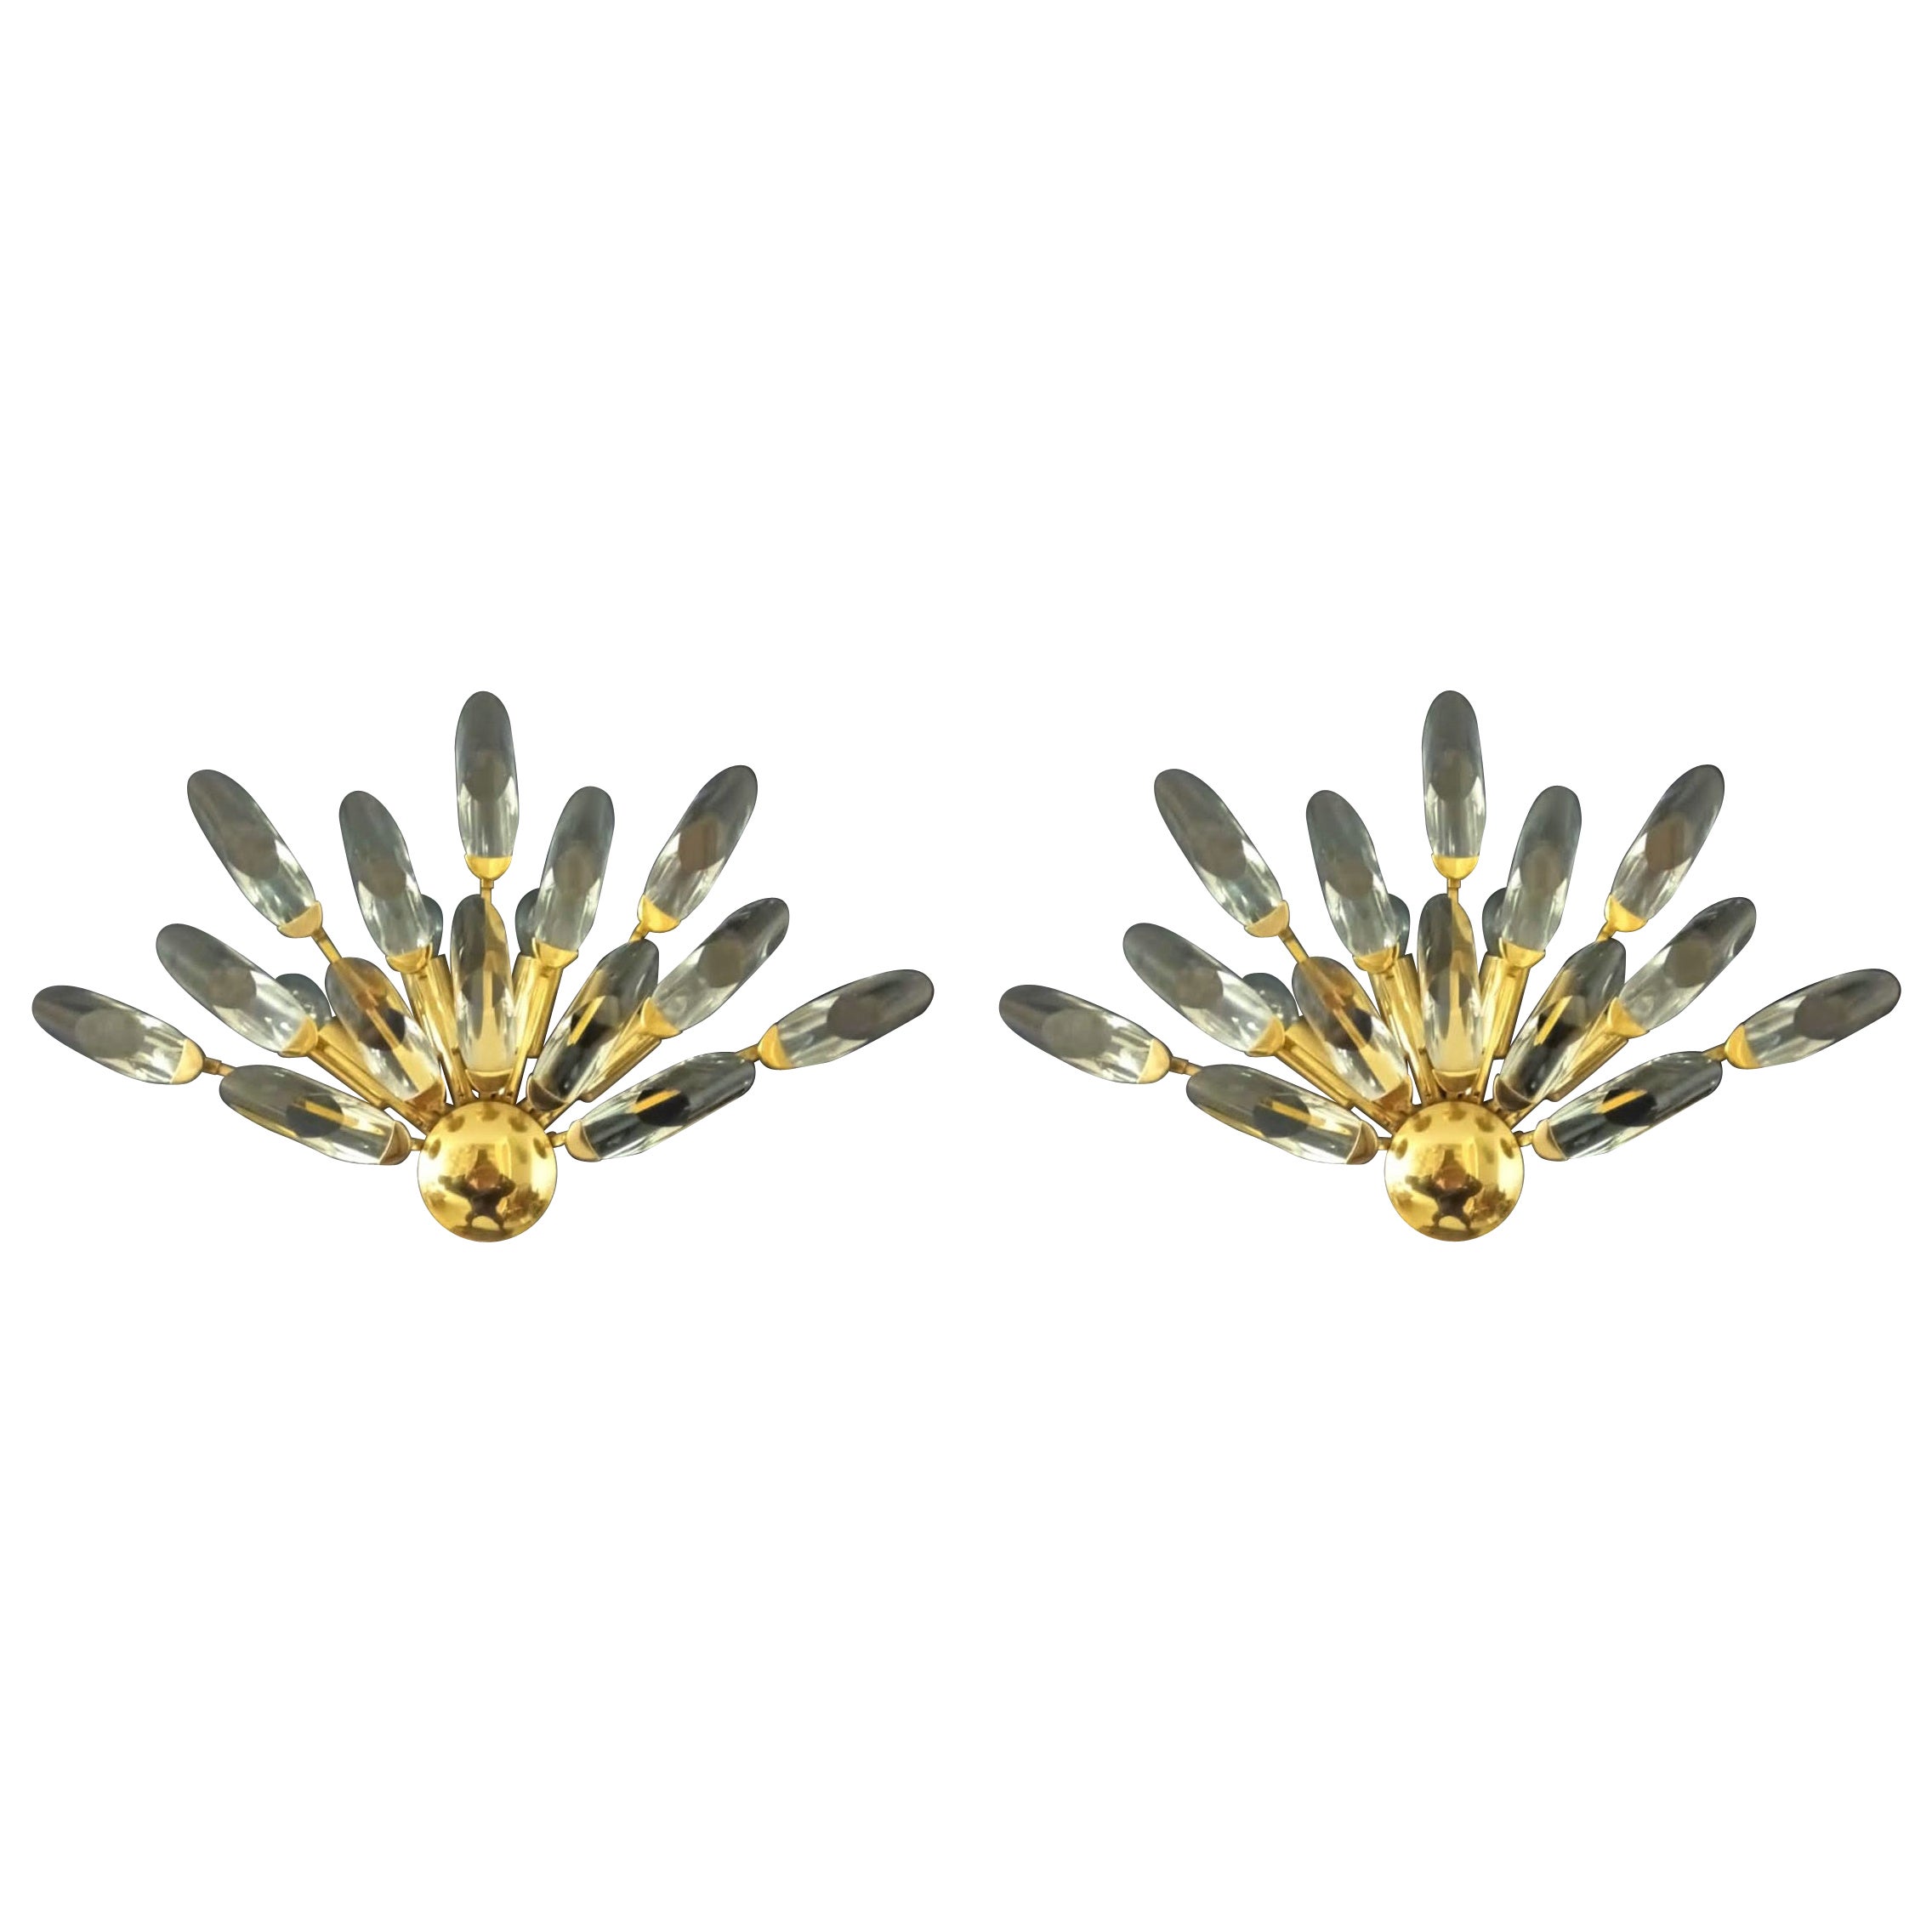 Pair of Gilt Brass Crystal Sconces by Stilkronen